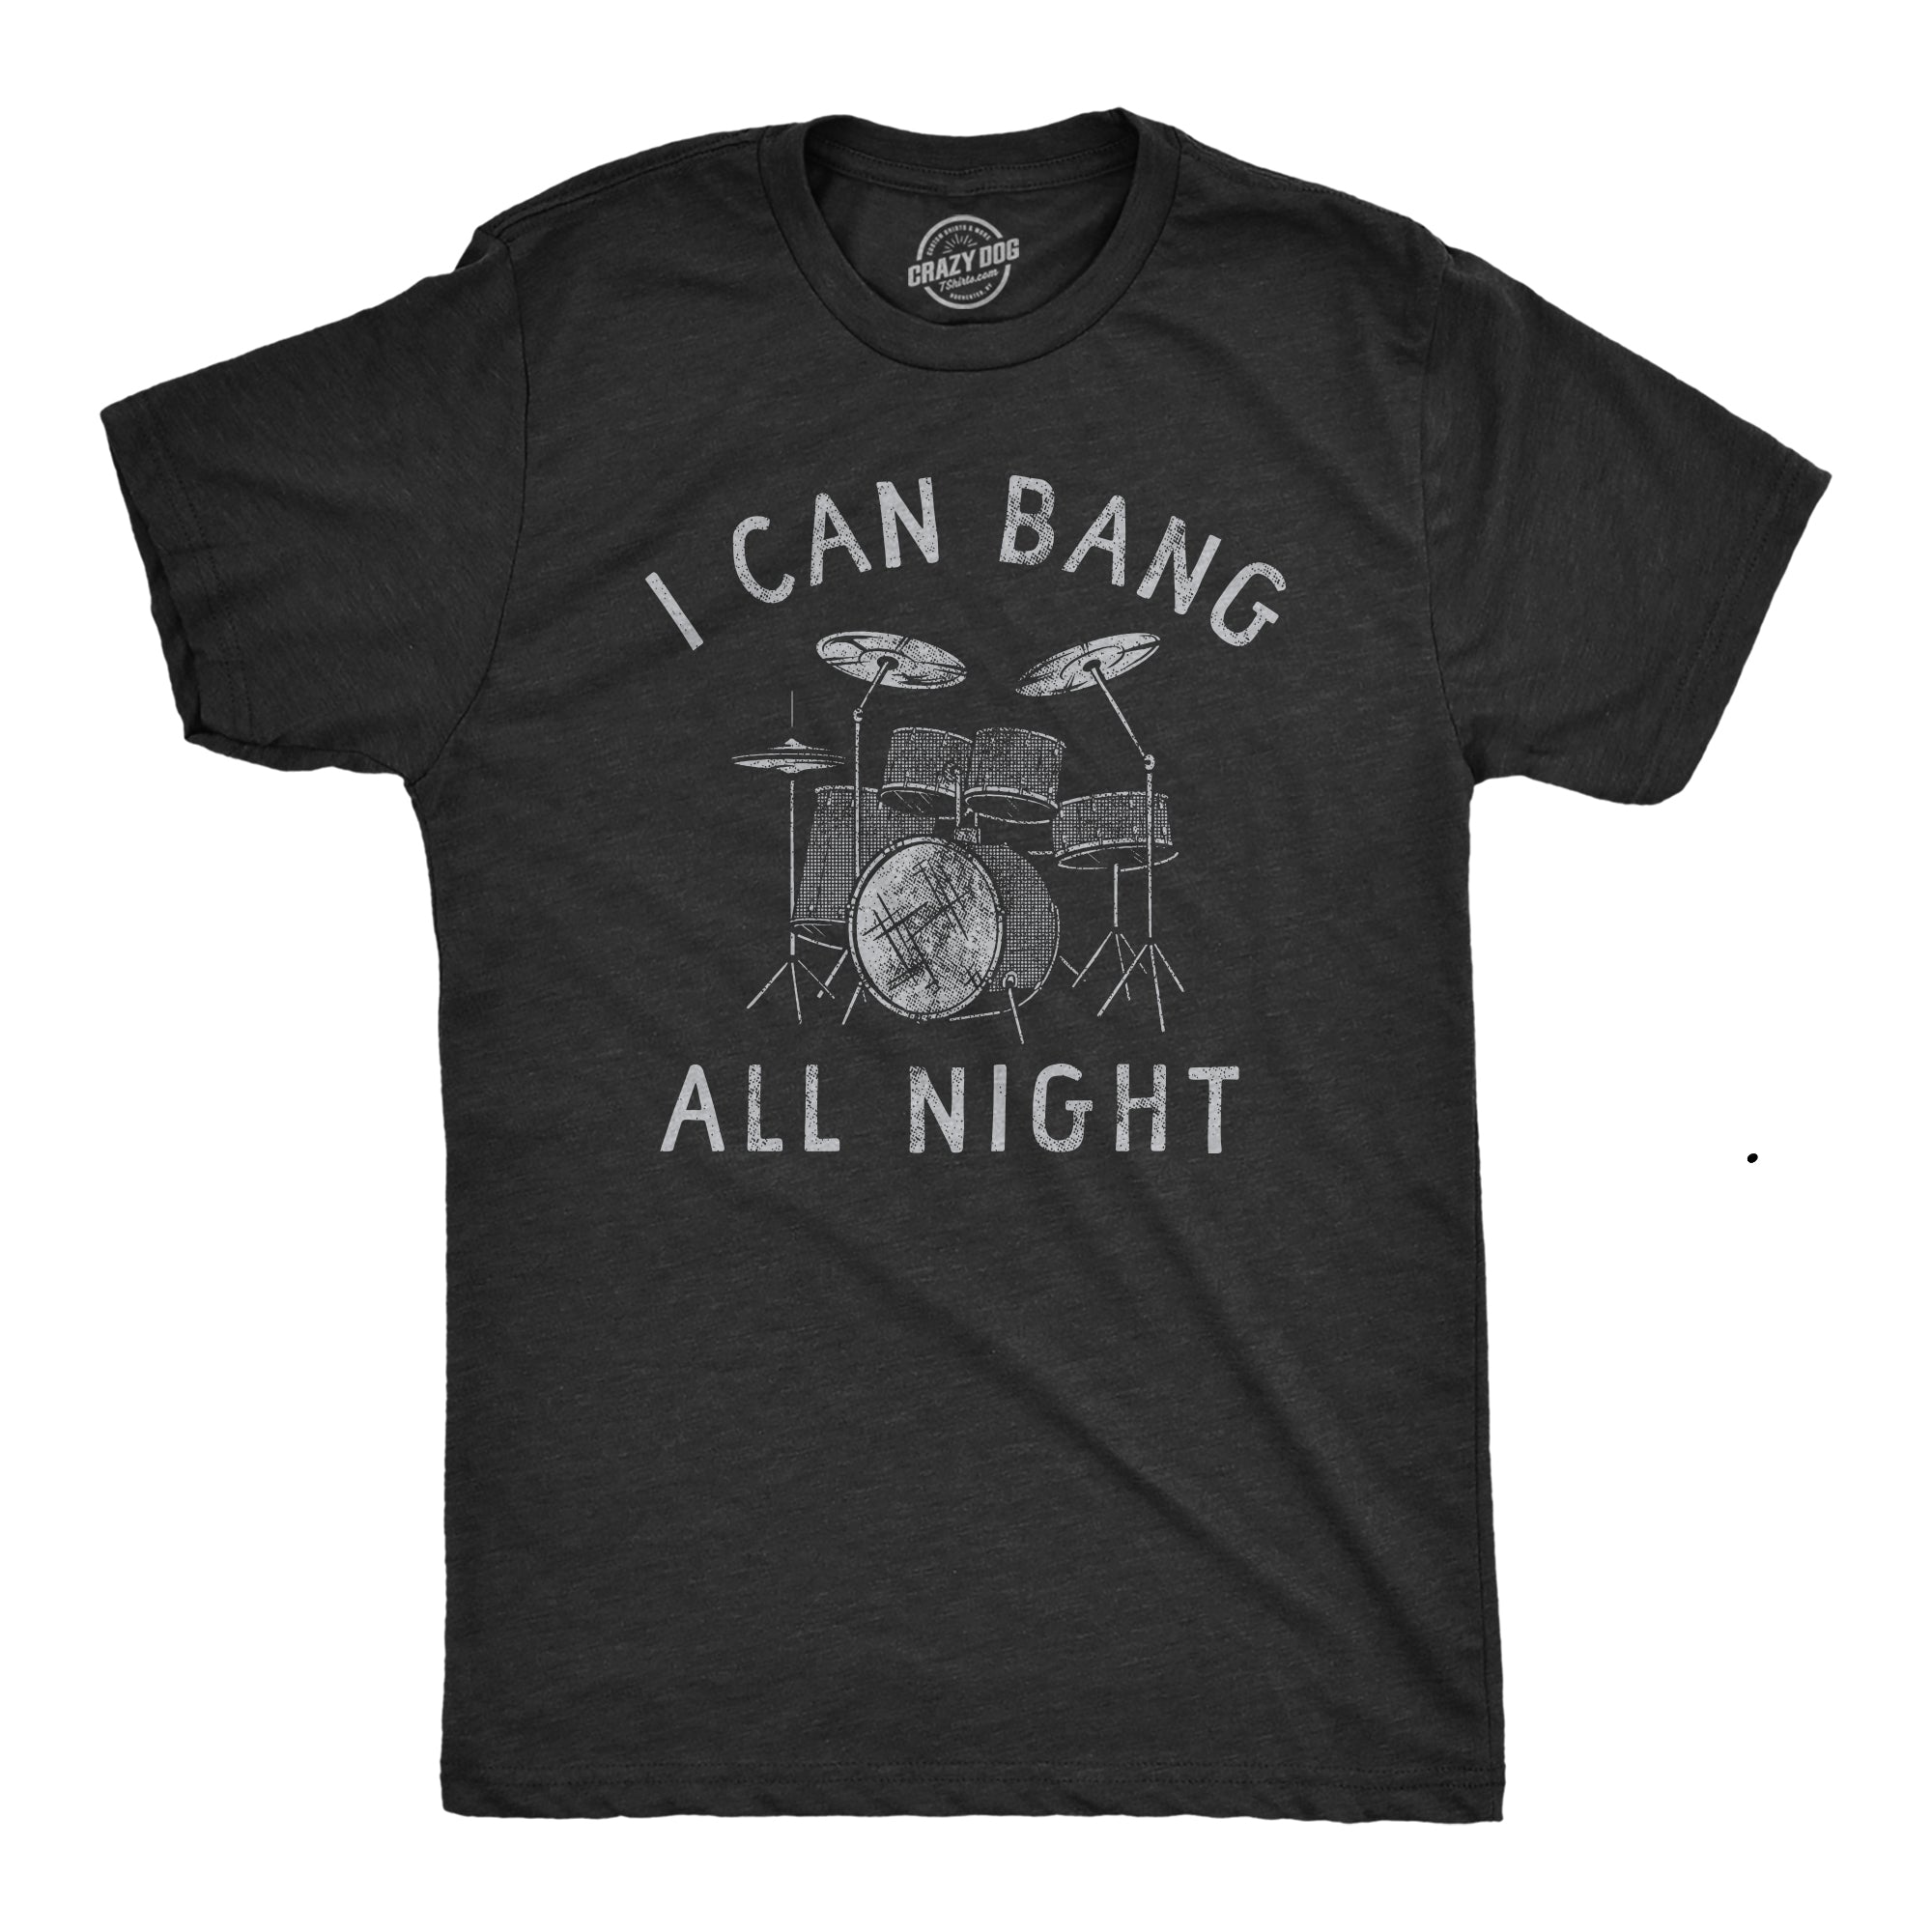 Funny Heather Black - BANG Bang All Night Long Mens T Shirt Nerdy Sex Music Tee